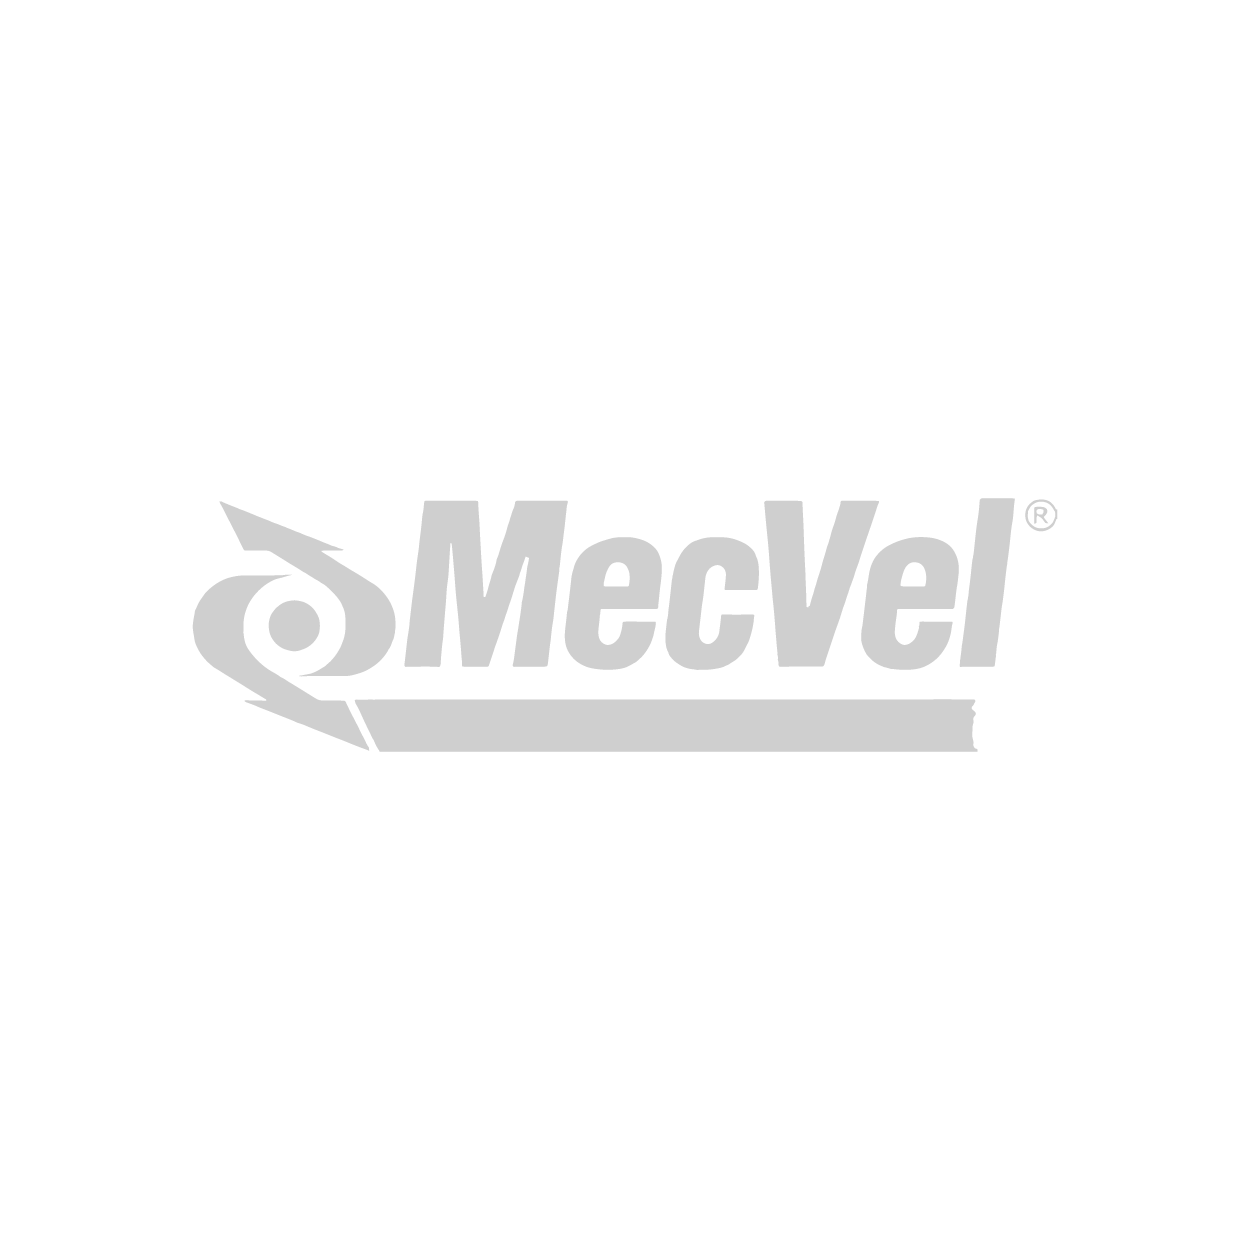 MecVel